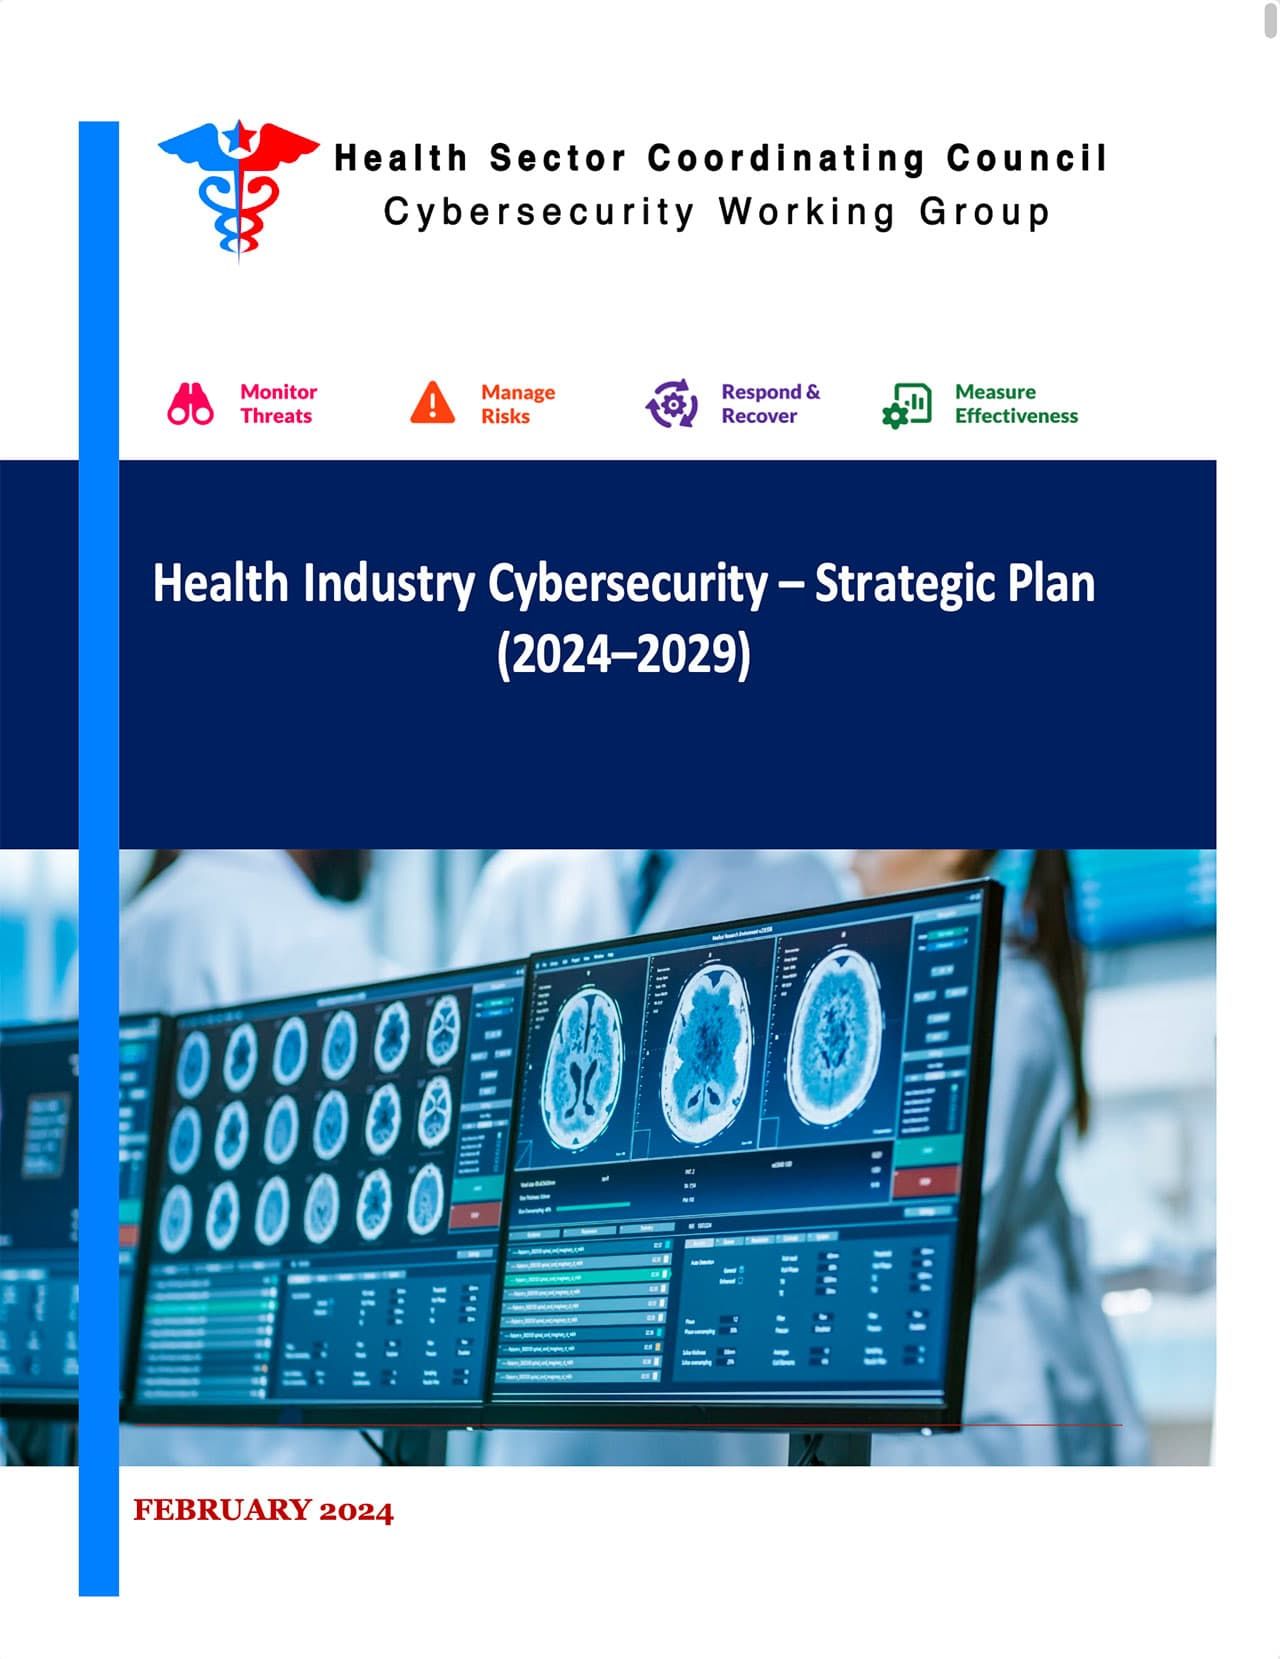 Health Industry Cybersecurity Strategic Plan 2024-2029